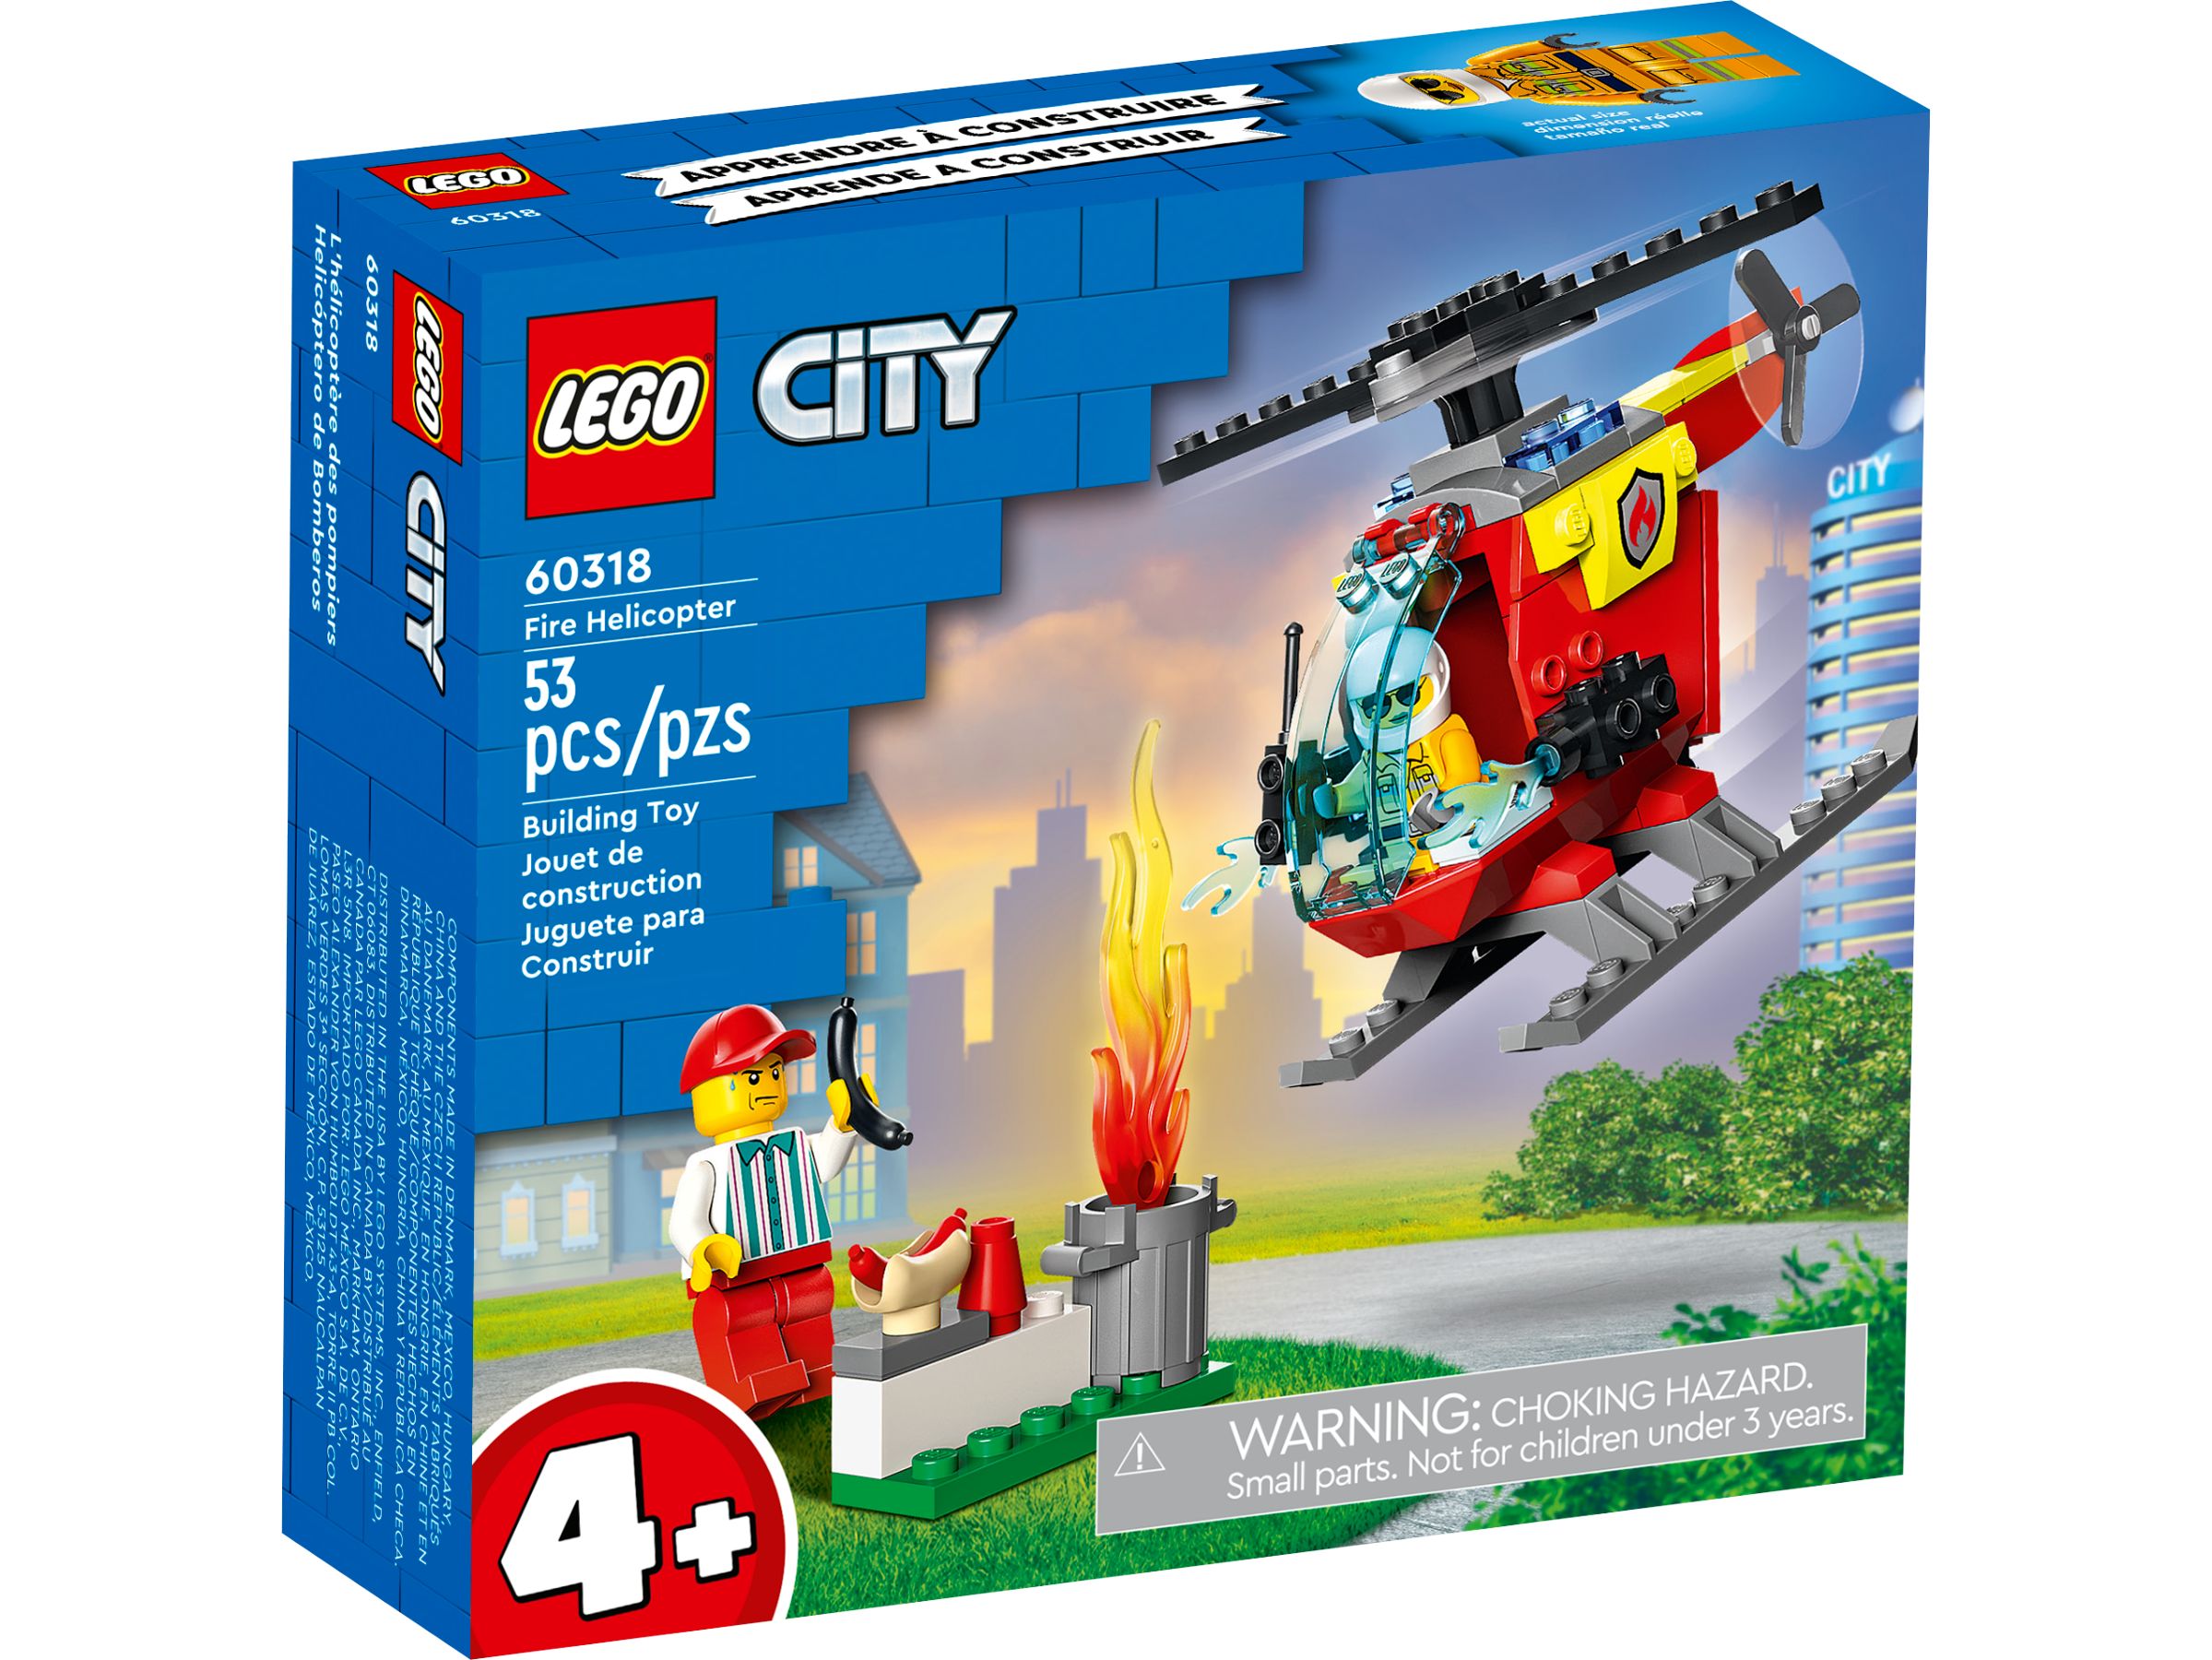 LEGO 60243 - Погоня на полицейском вертолёте